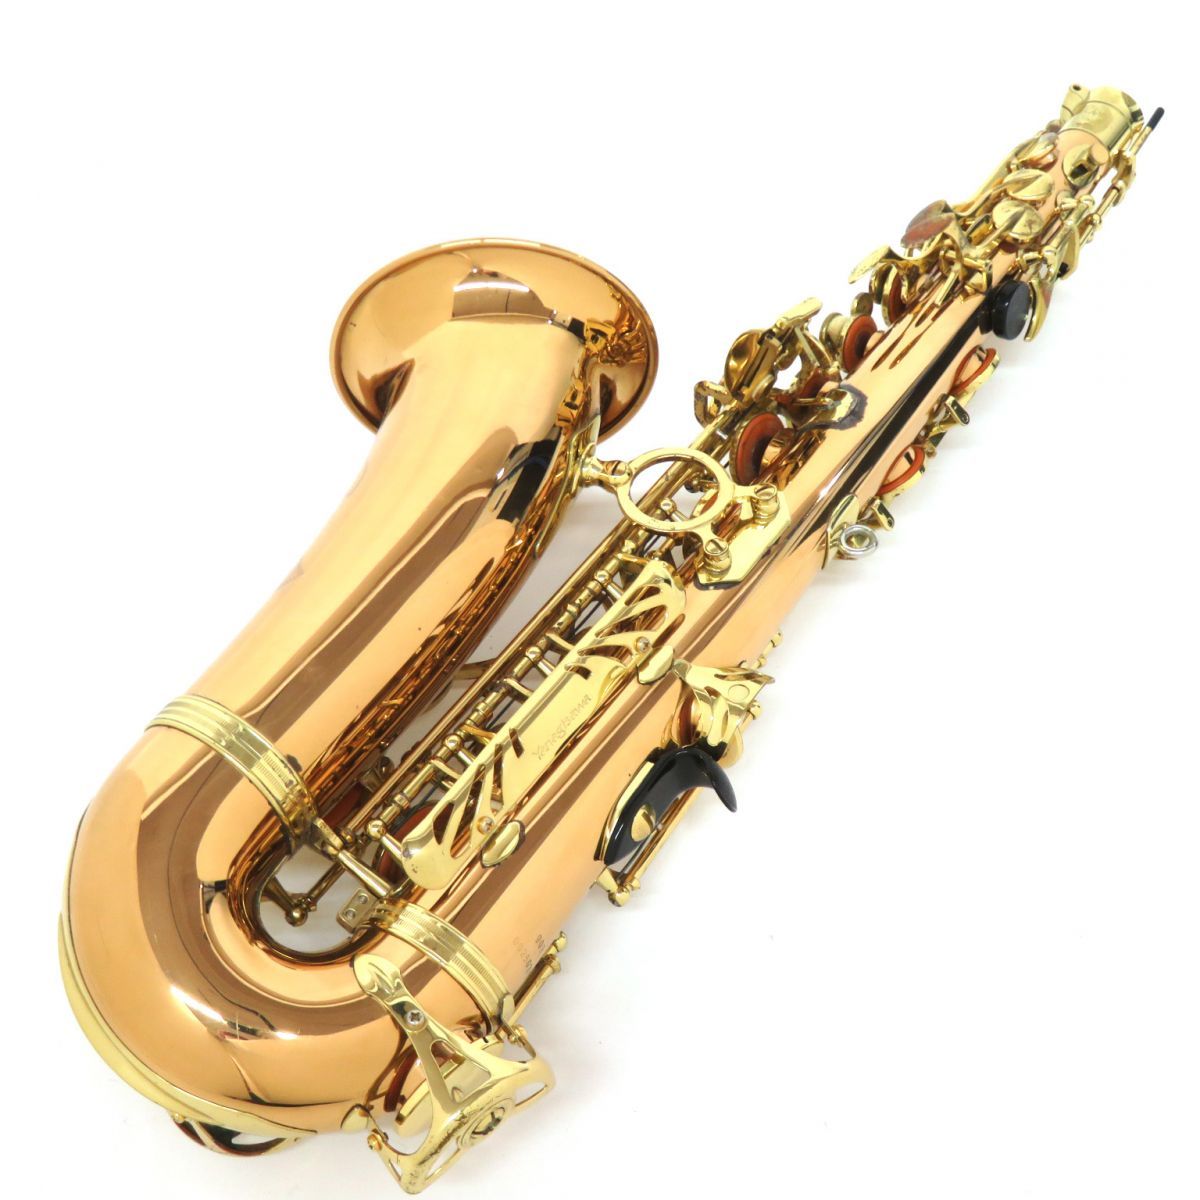 095s*YANAGISAWAyanagisawa902 alto saxophone wind instruments case attaching * used 